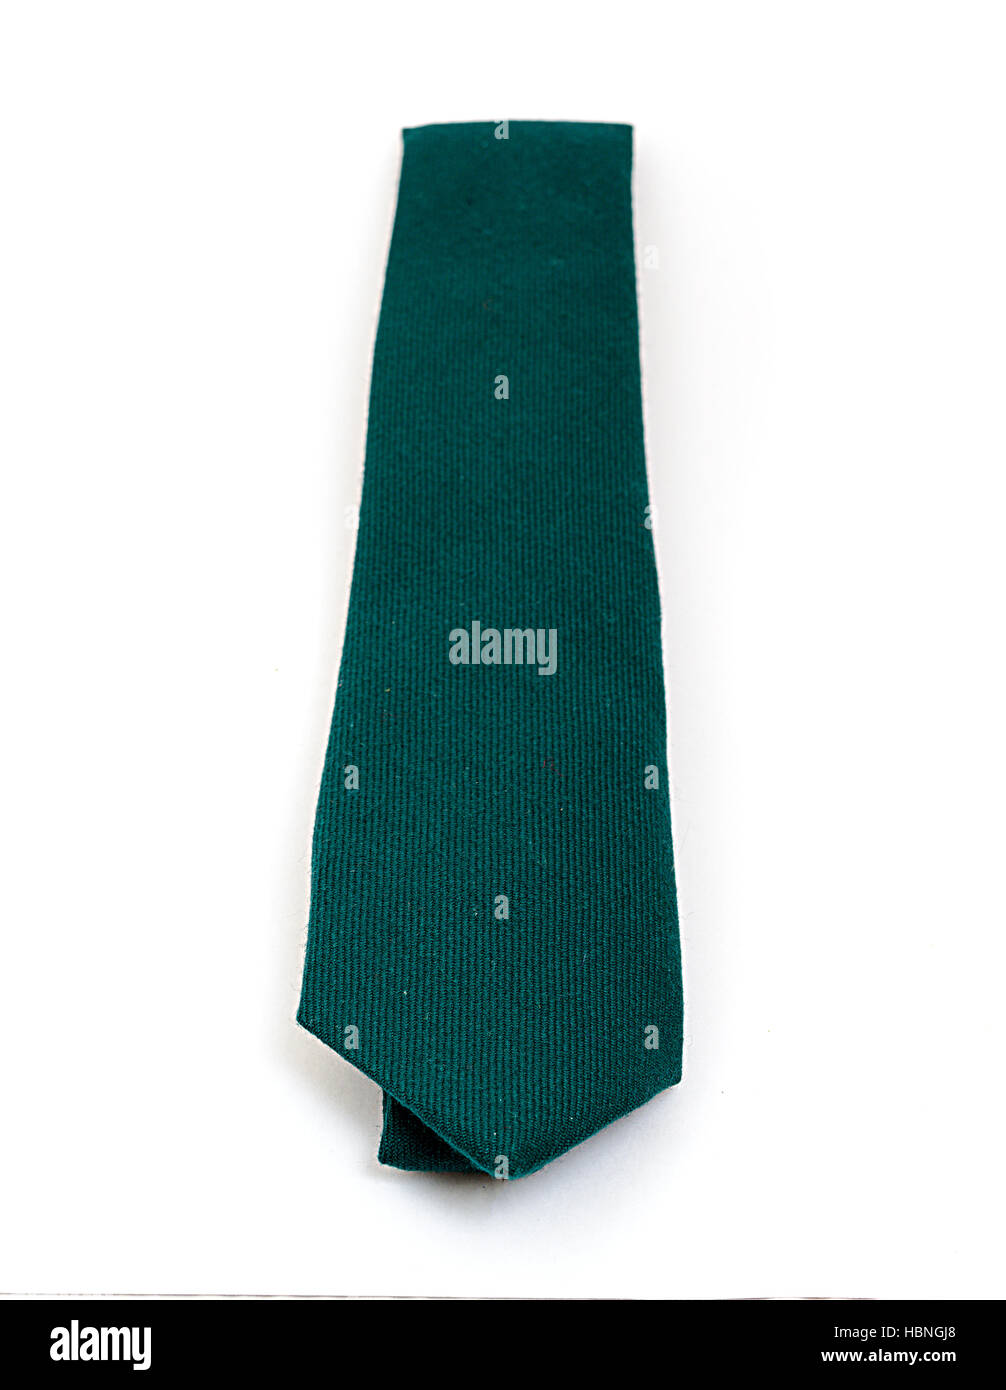 Cravate de laine vert émeraude Photo Stock - Alamy